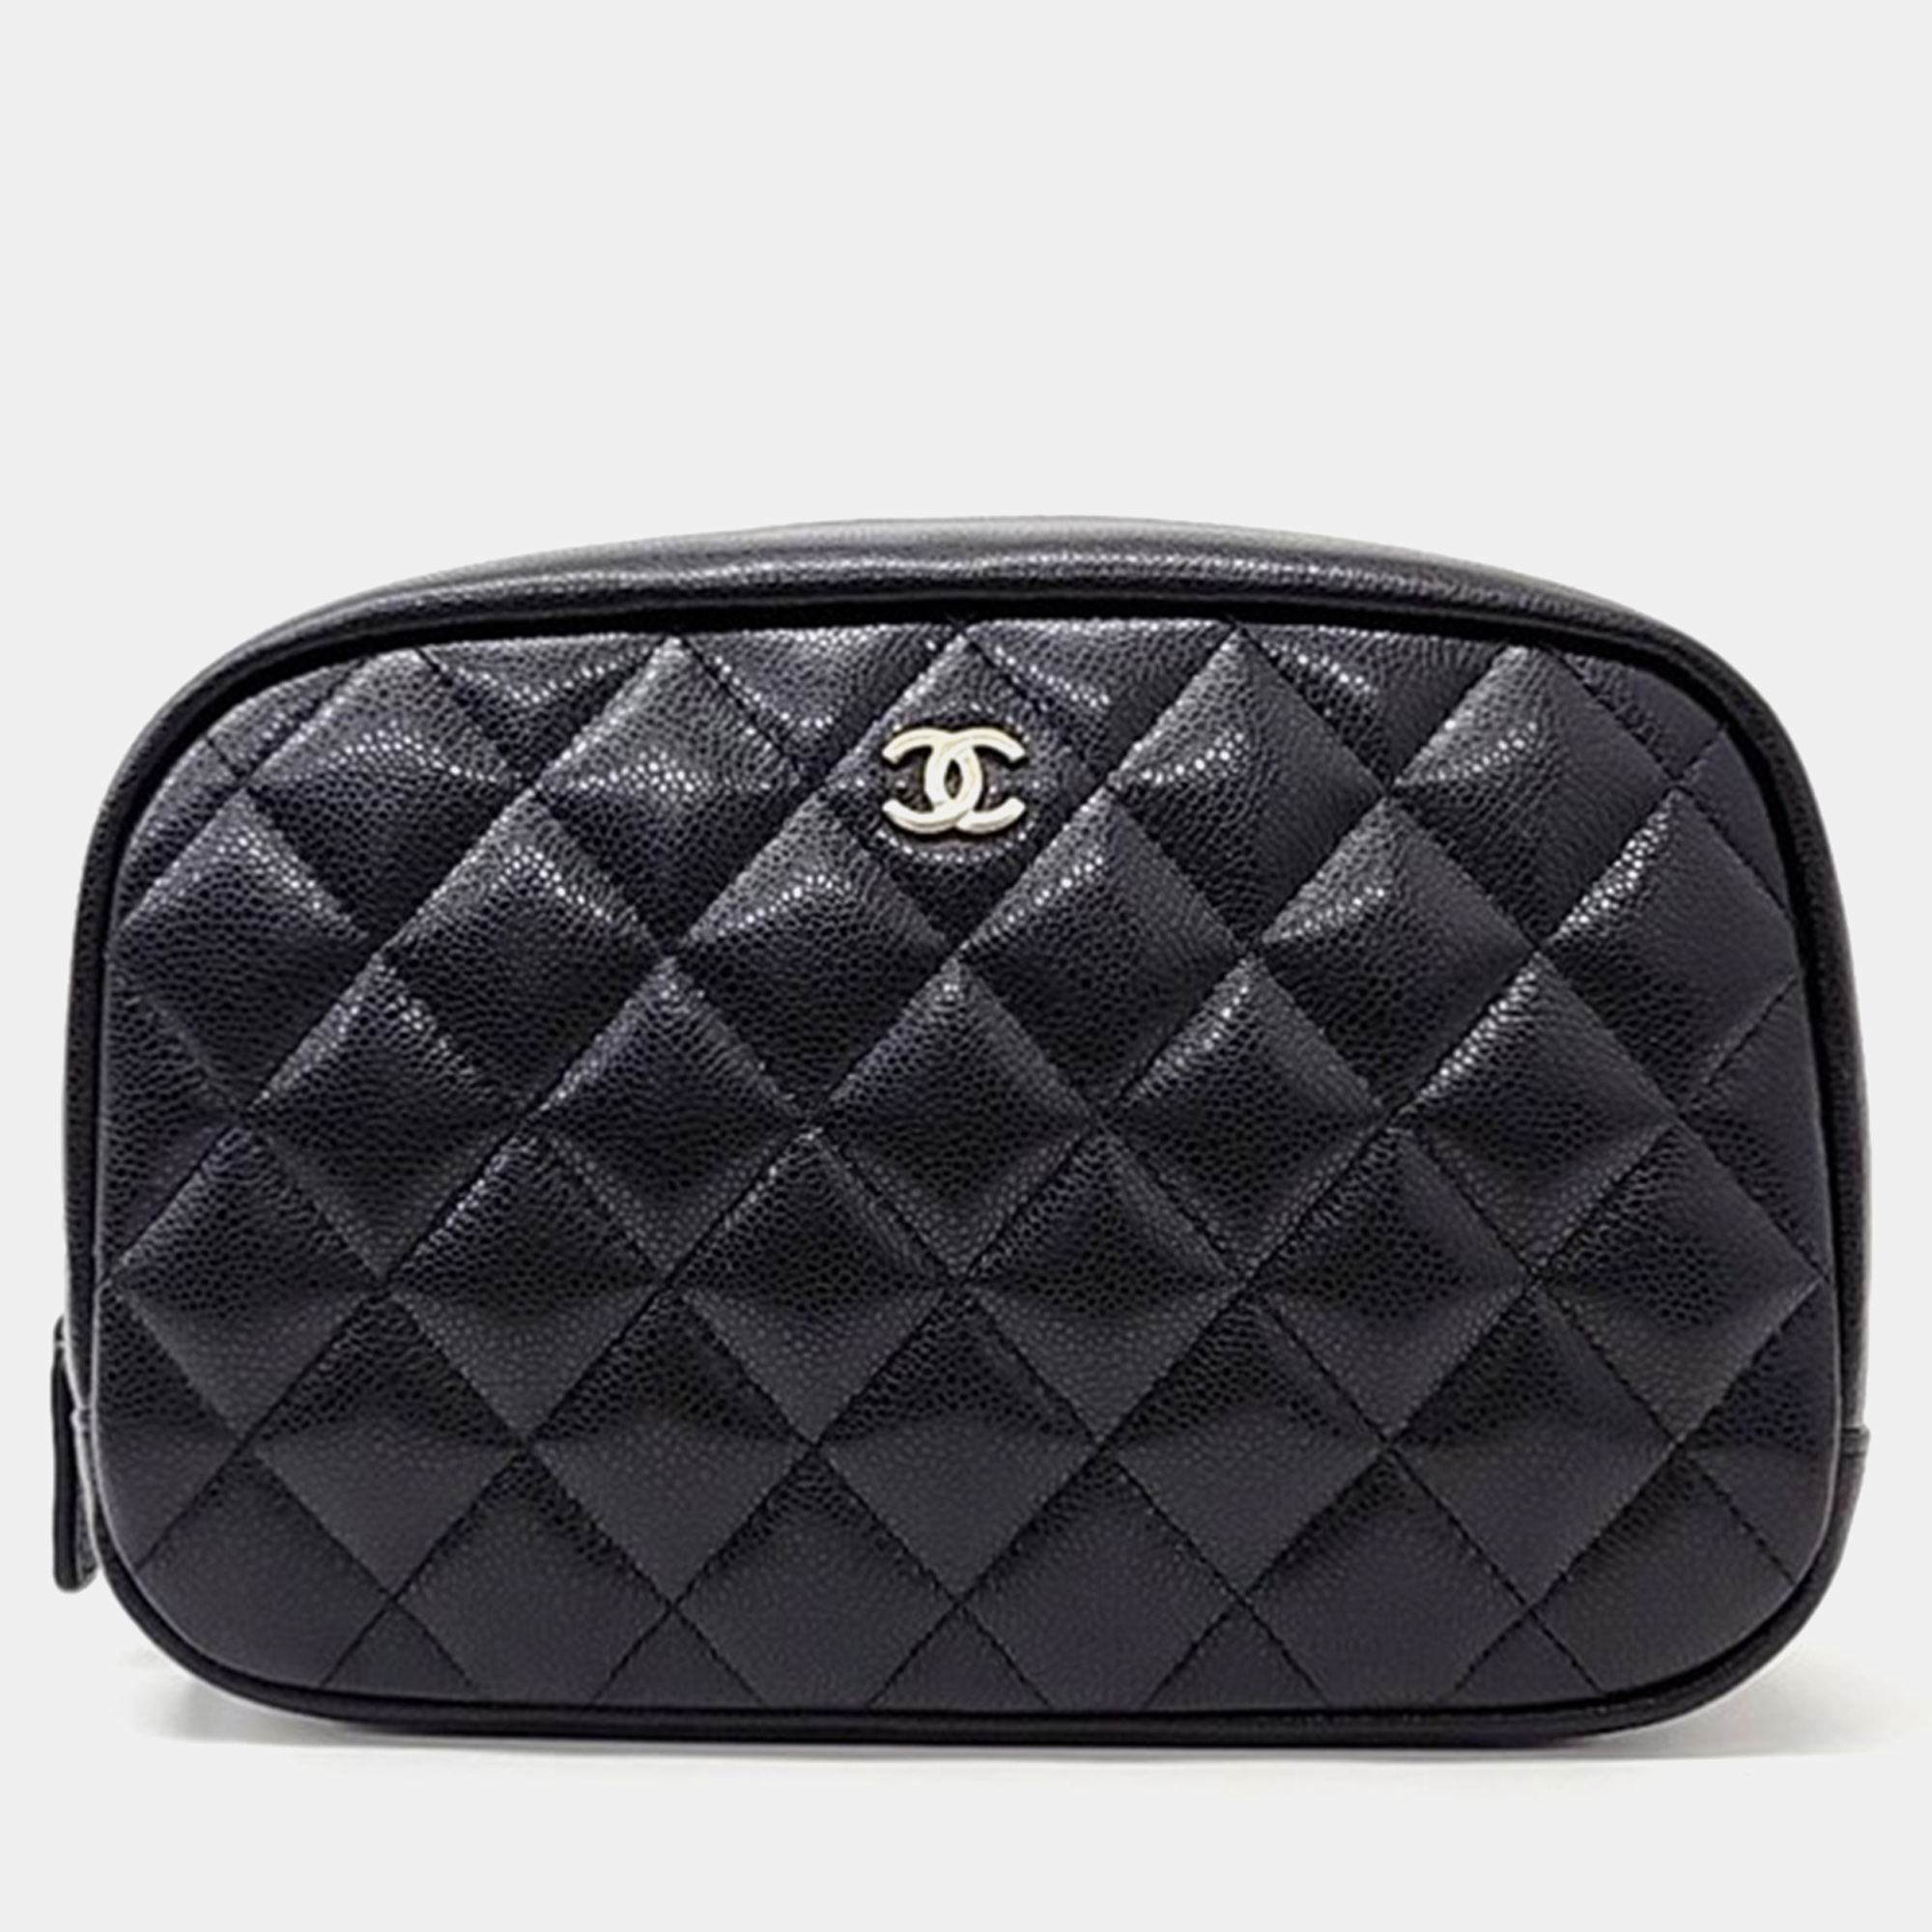 Chanel caviar pouch